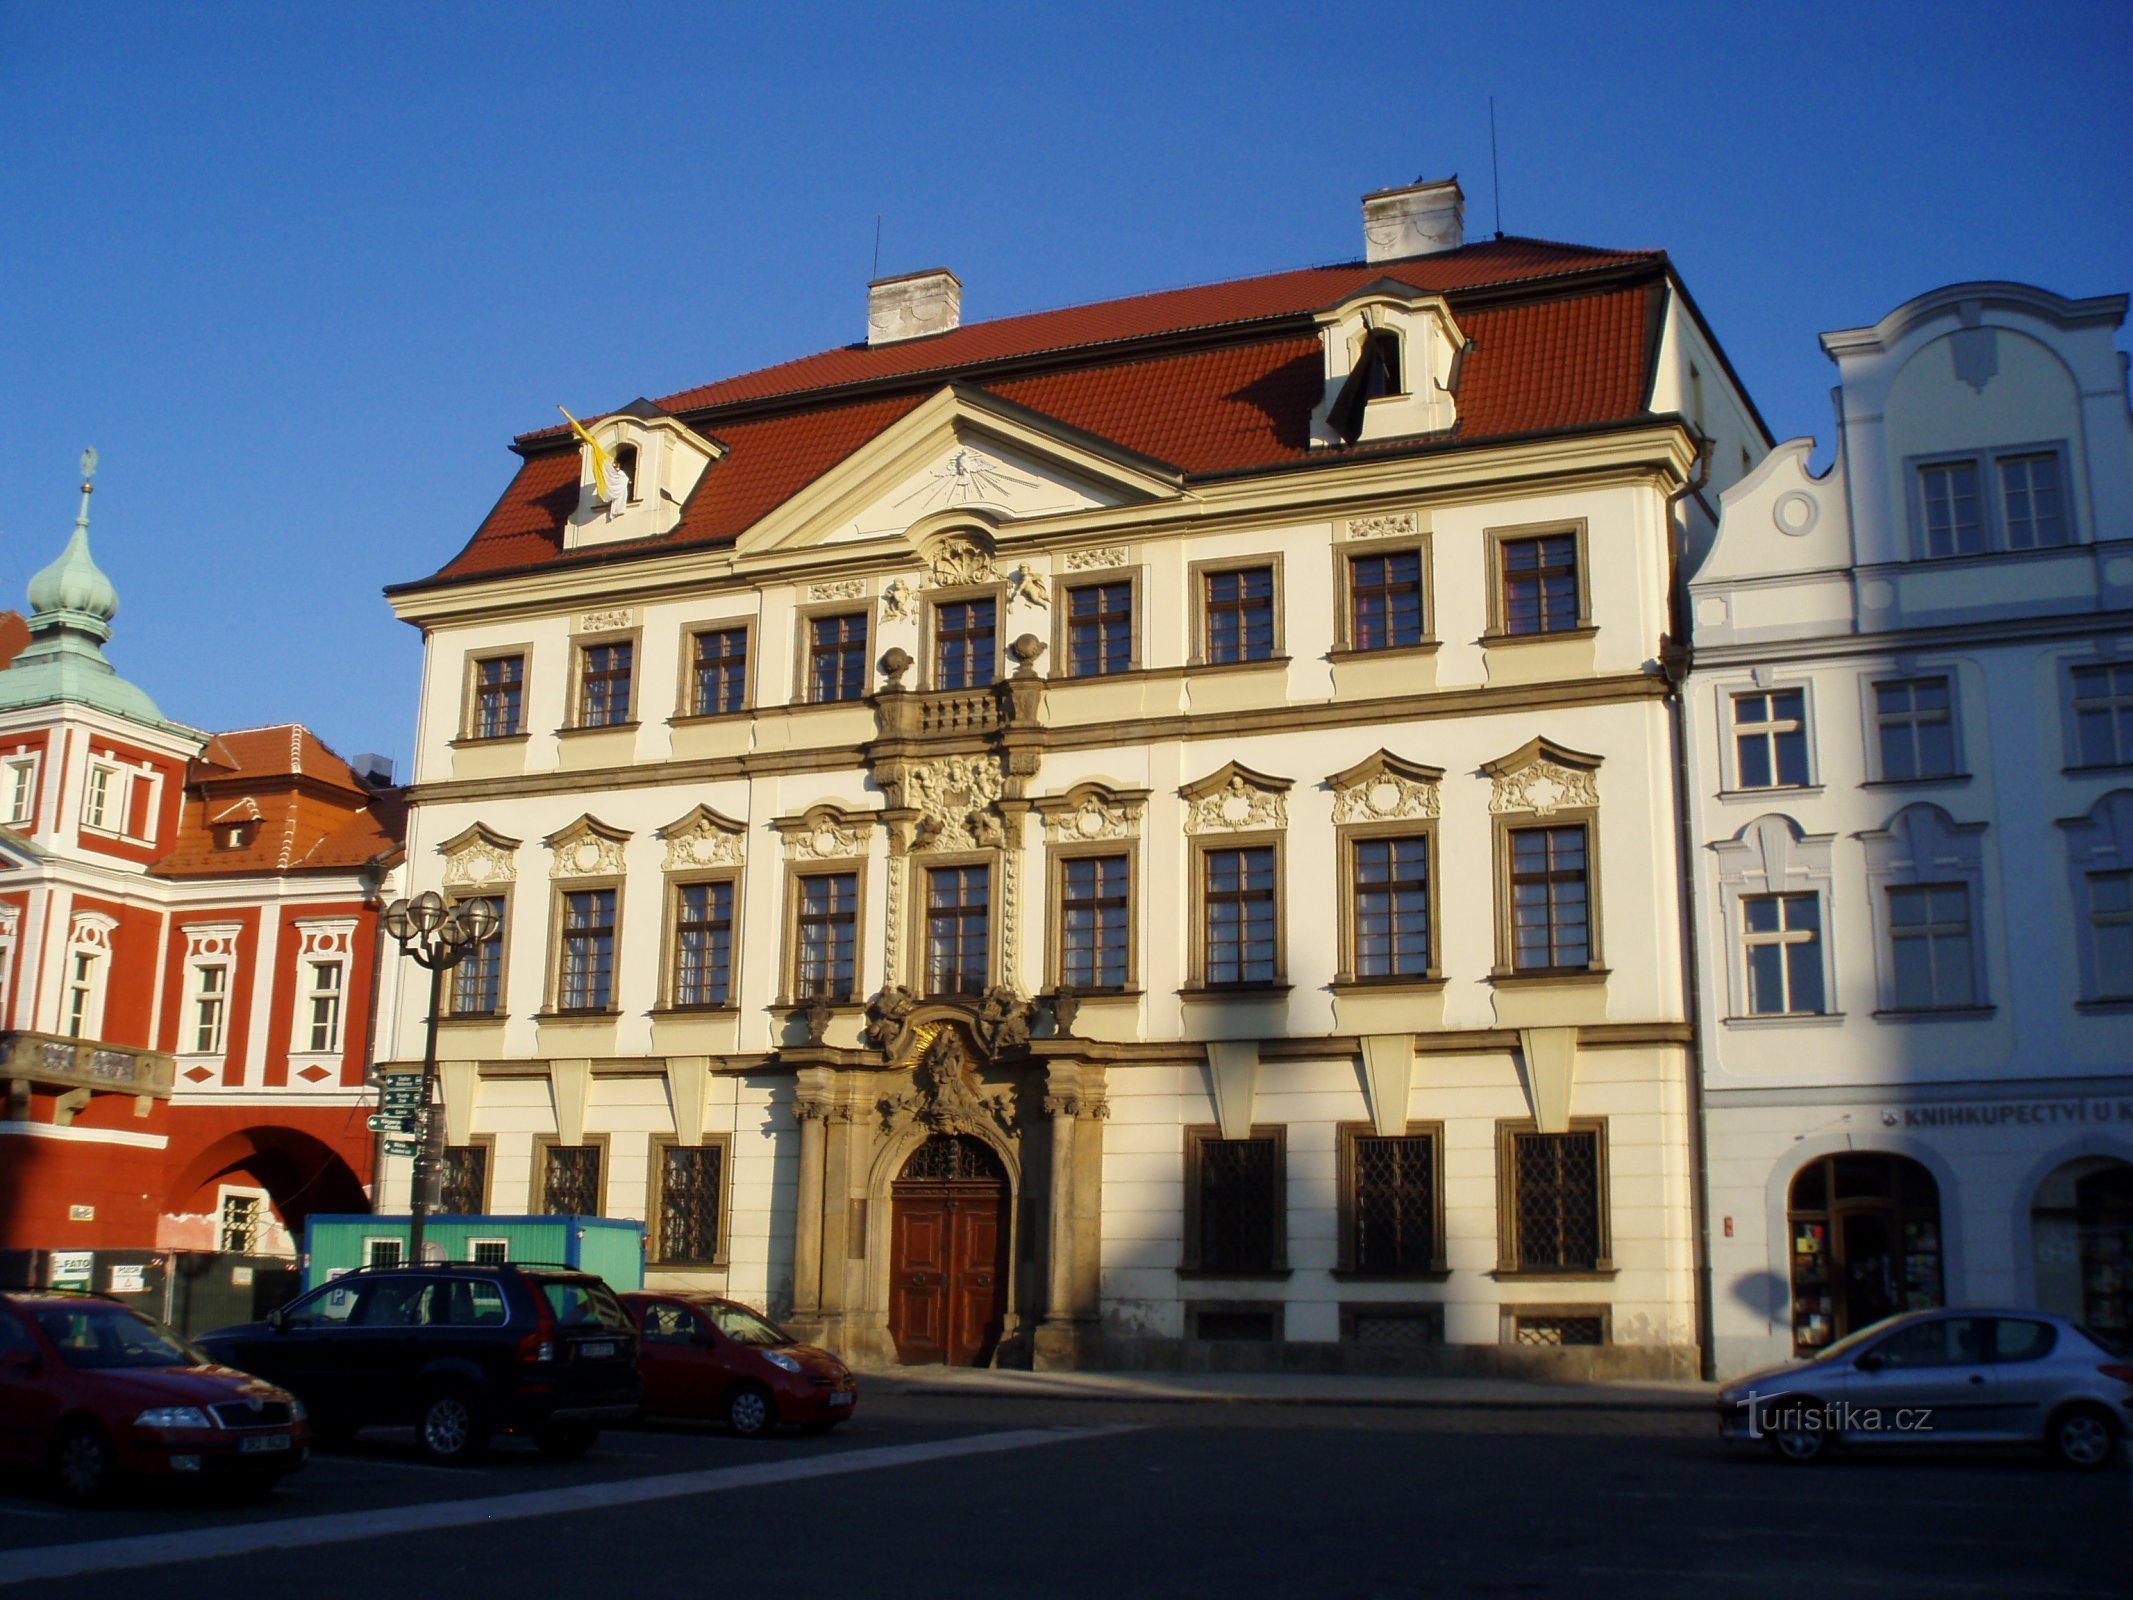 Piispan residenssi (Hradec Králové, 30.5.2011)